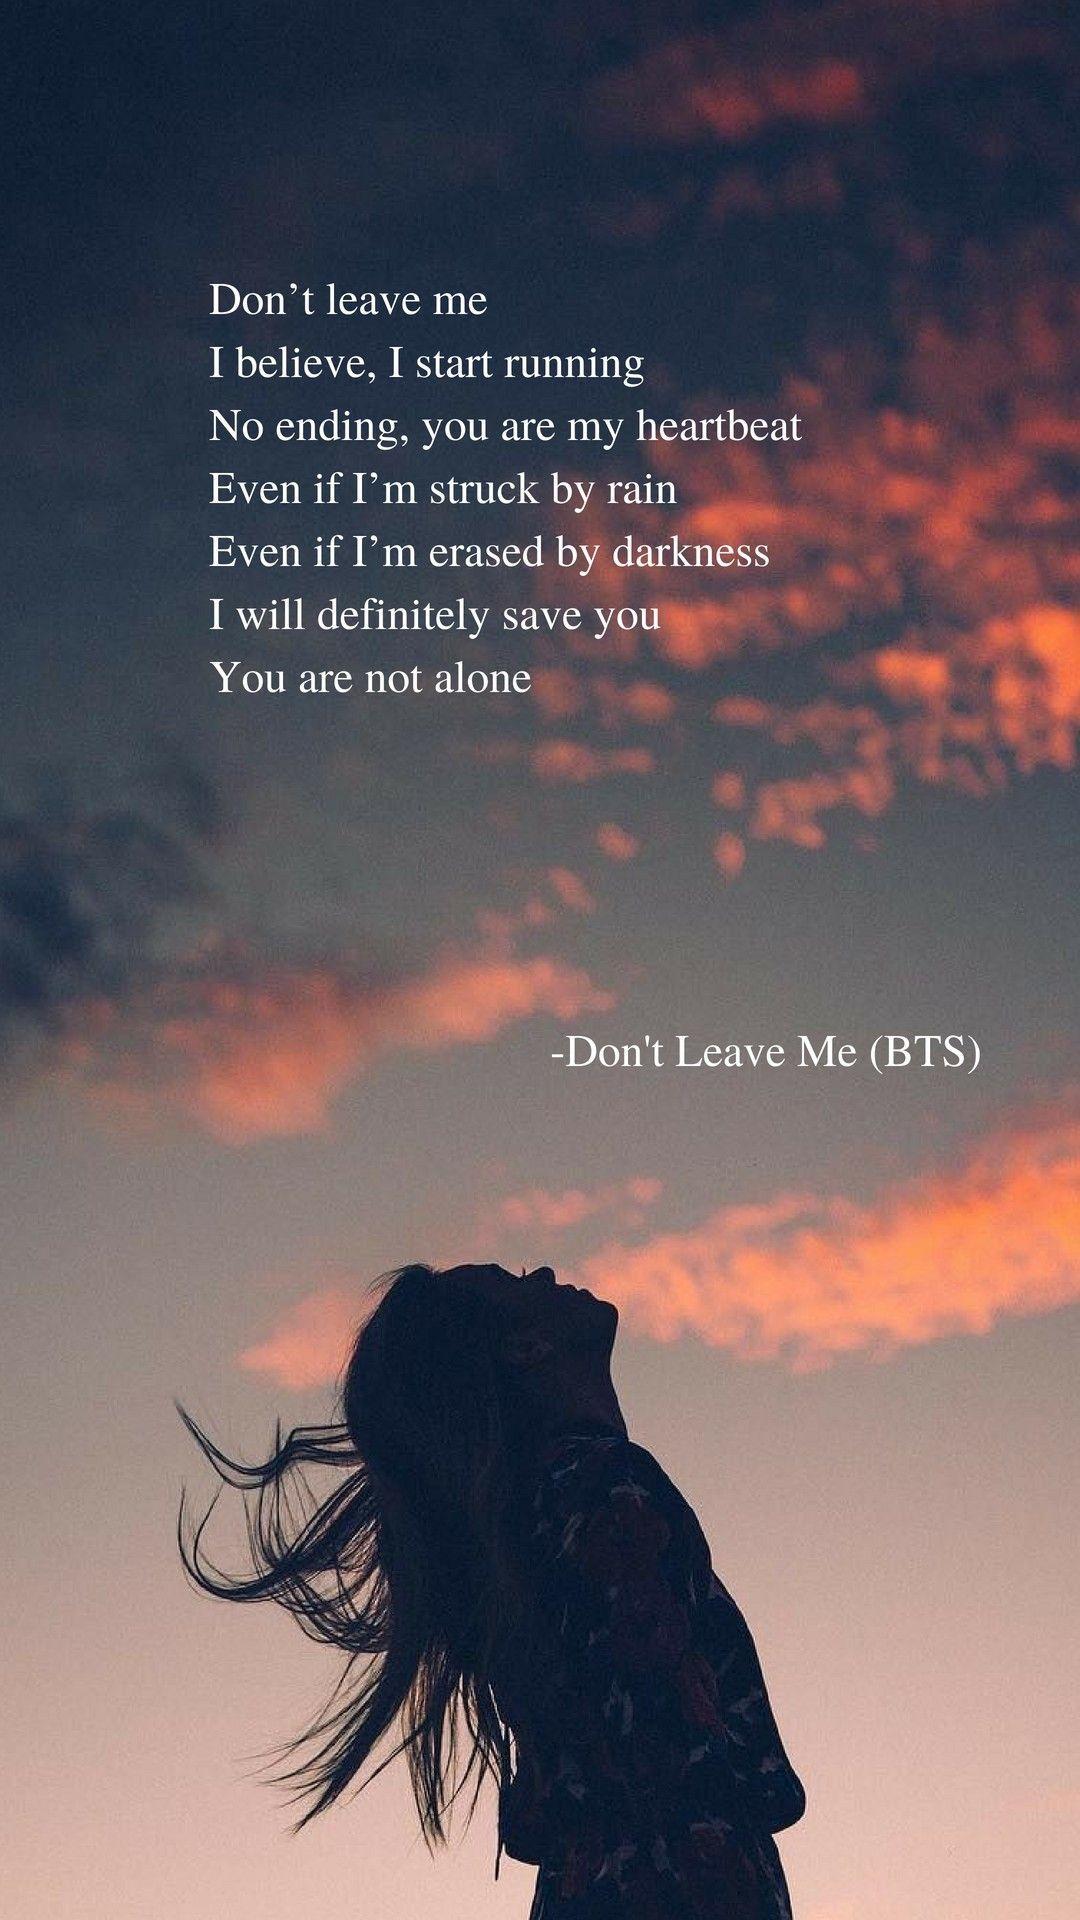 Don't Leave Me (BTS) lyrics wallpaper. BTS Lyrics & Quotes. Bts